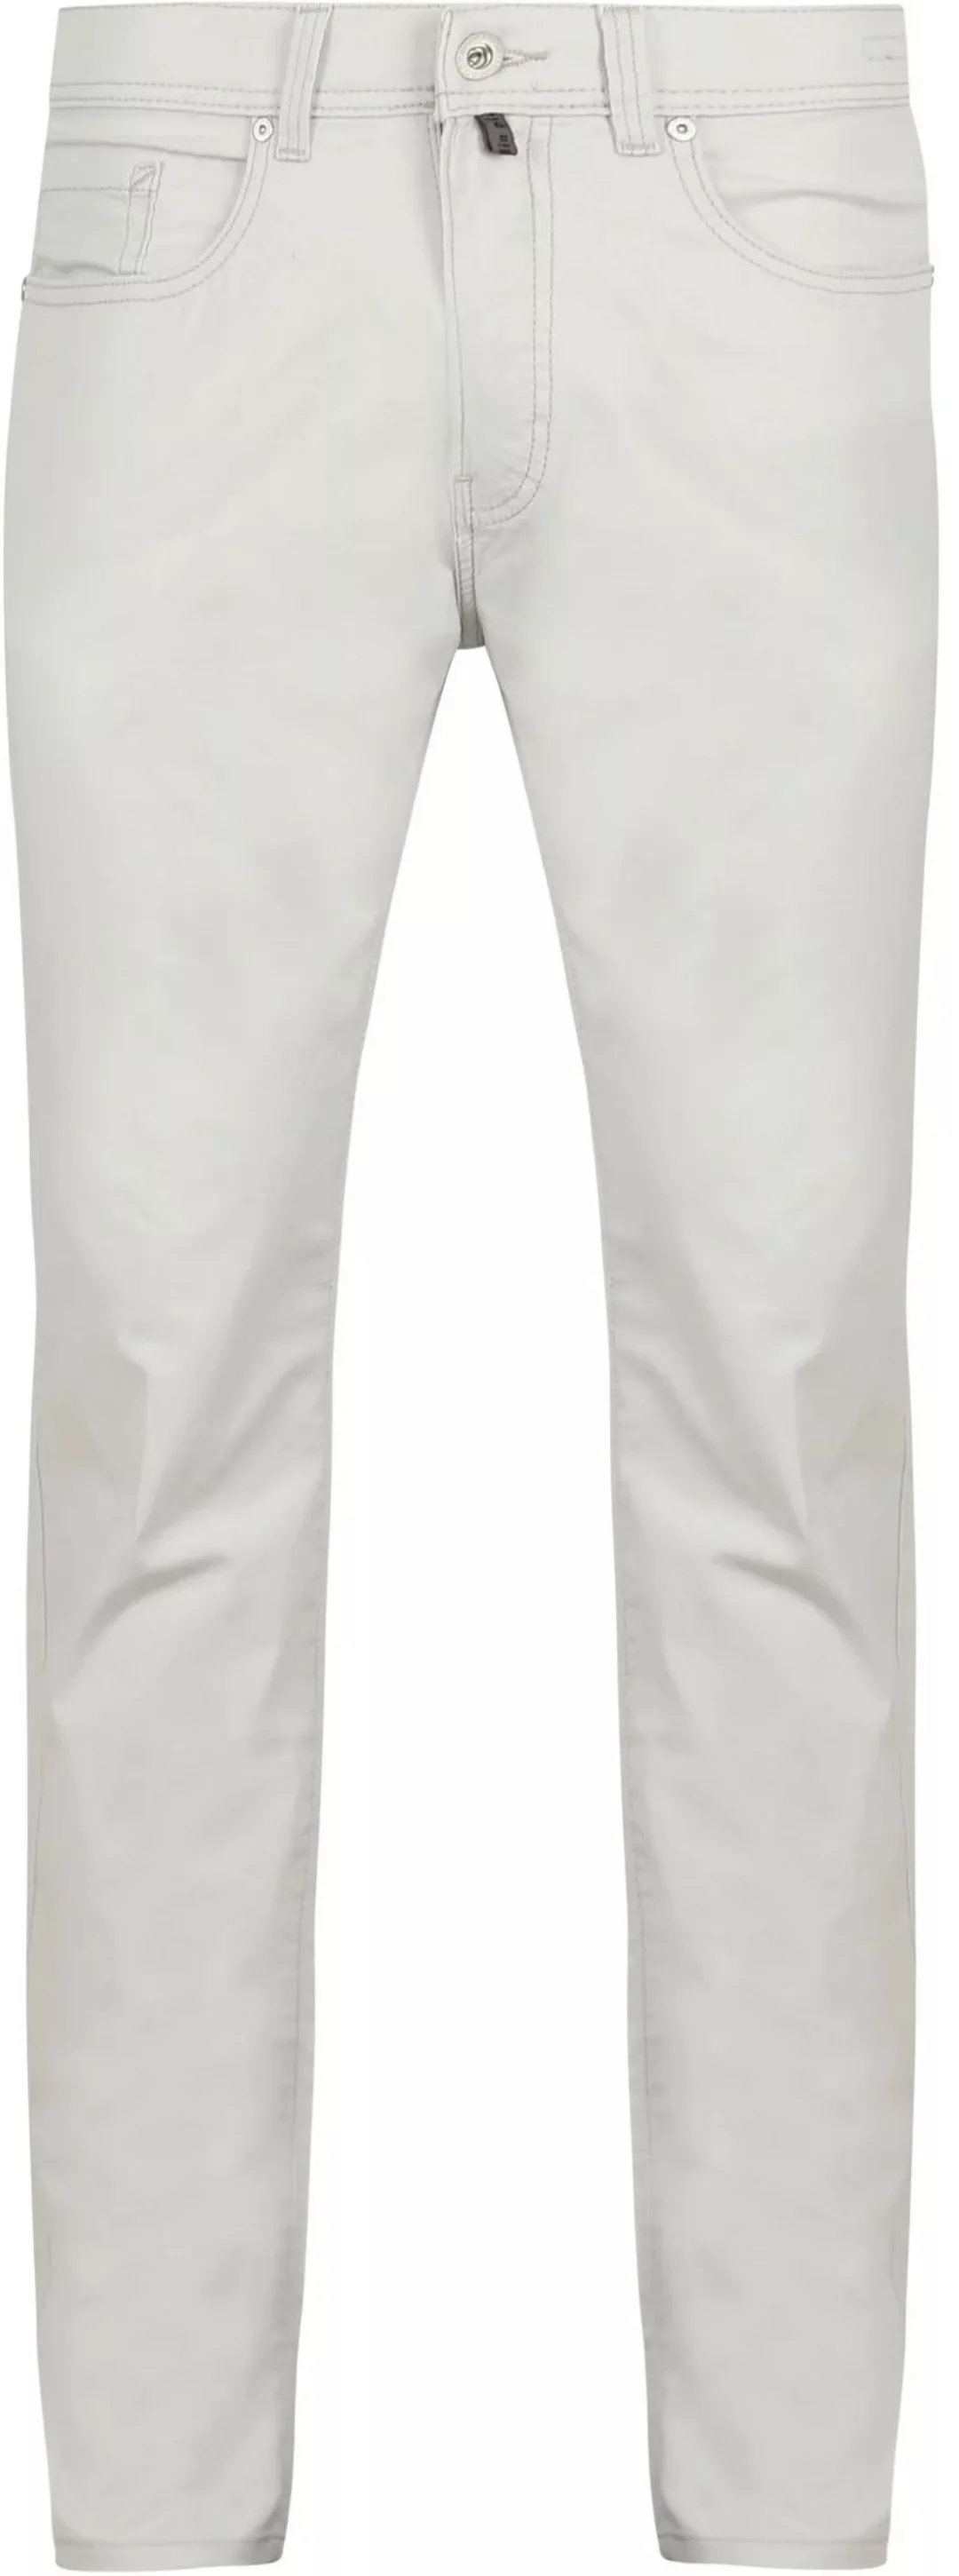 Pierre Cardin Trousers Lyon Tapered Hellgrau - Größe W 36 - L 30 günstig online kaufen